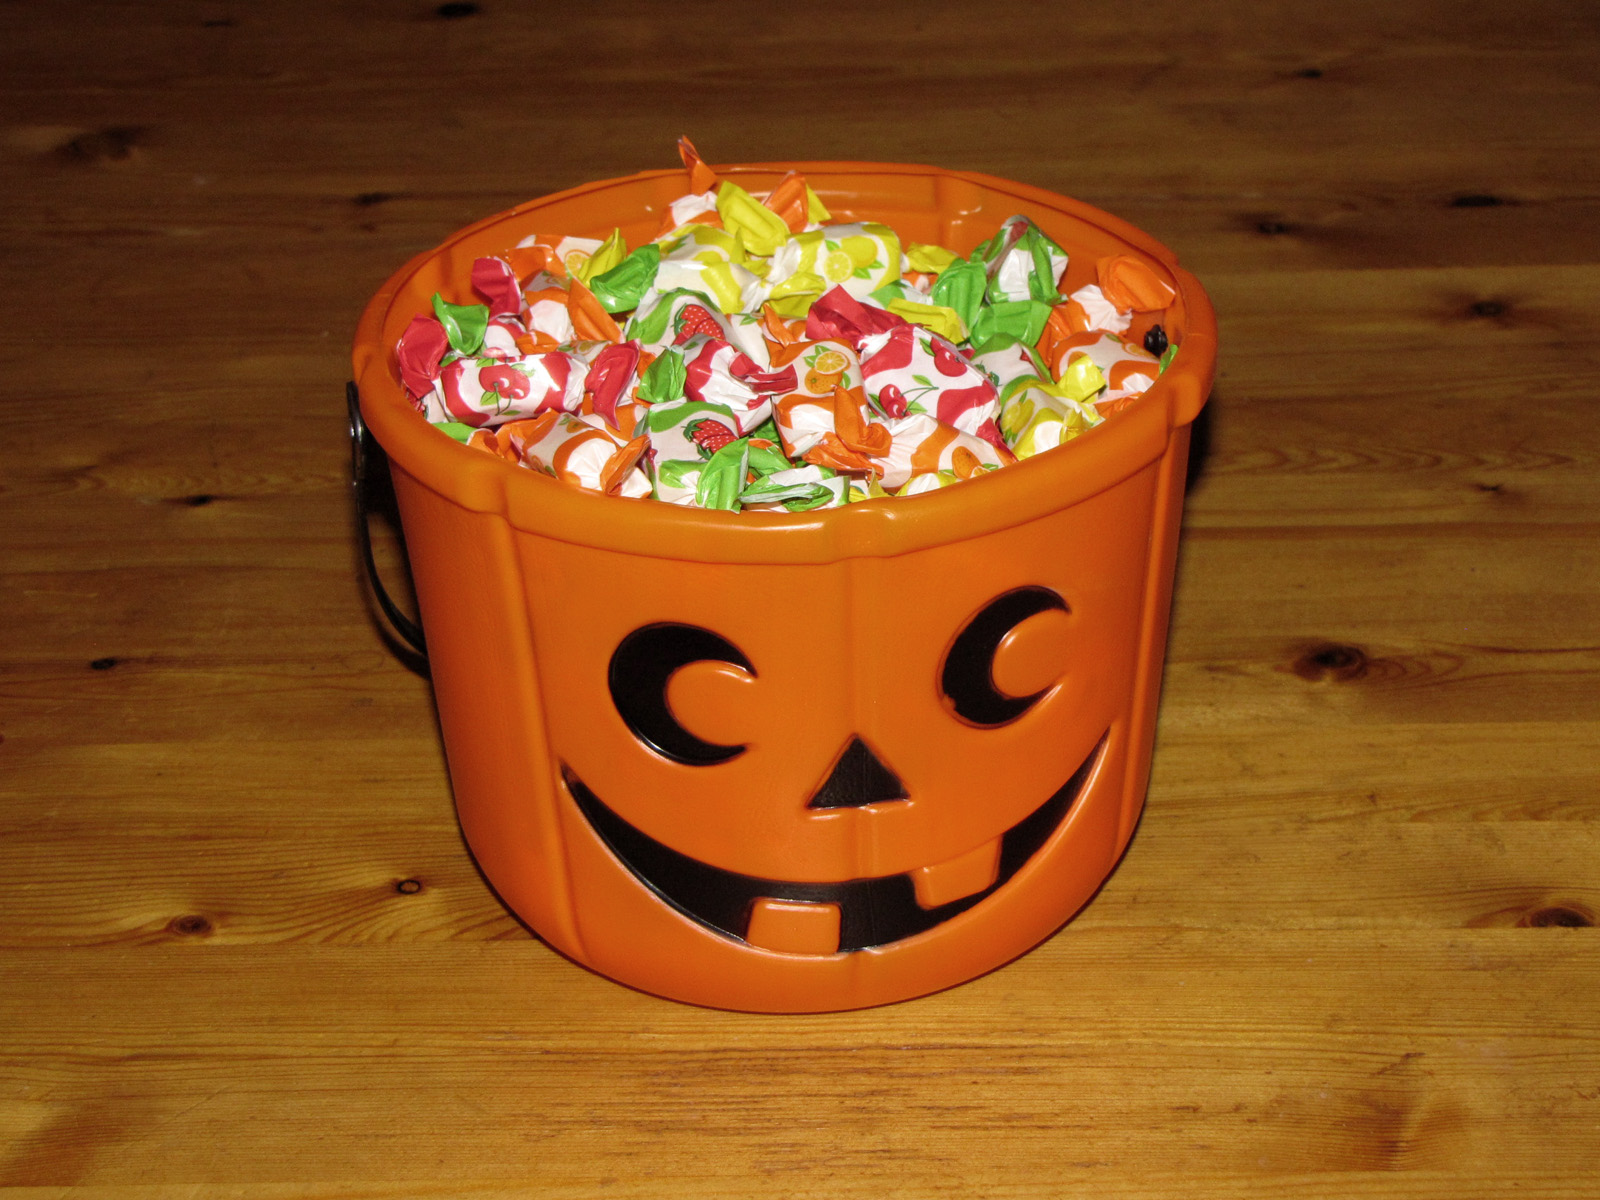 Mmmm. Halloween candy in a bucket.